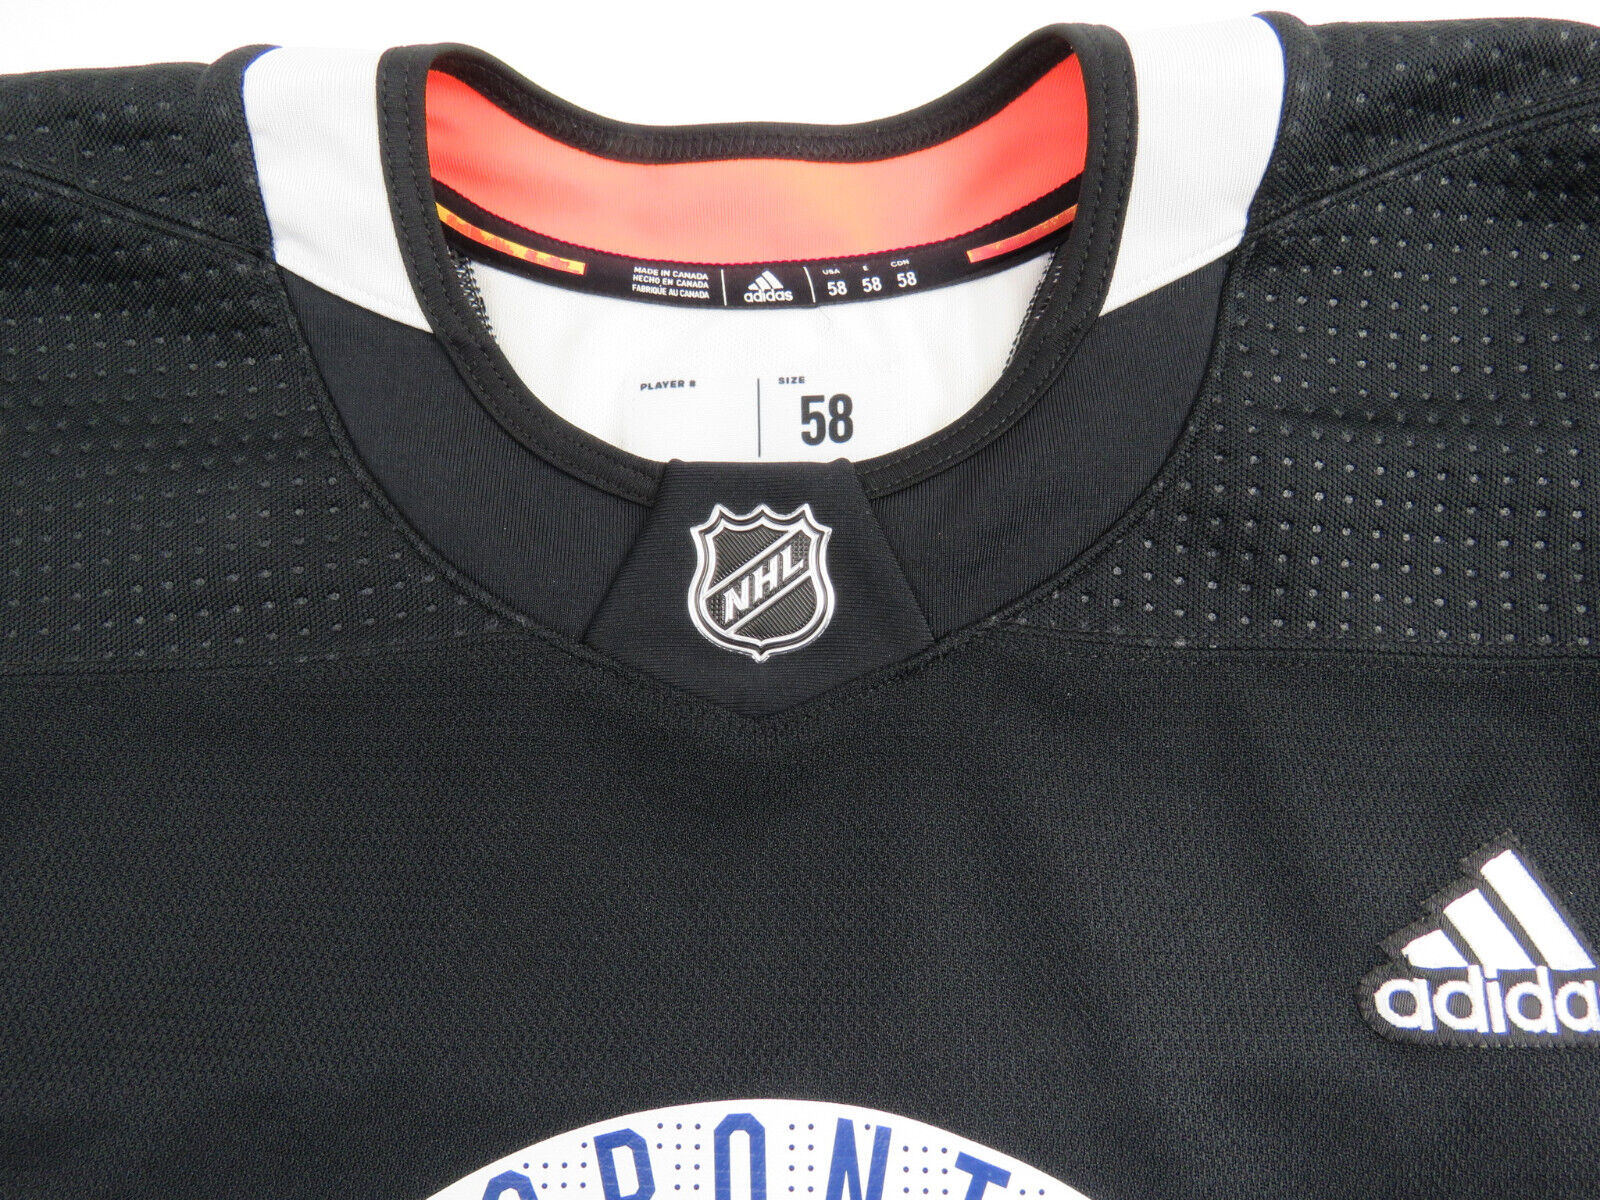 Adidas Toronto Maple Leafs Practice Worn Authentic NHL Hockey Jersey #84 Size 58